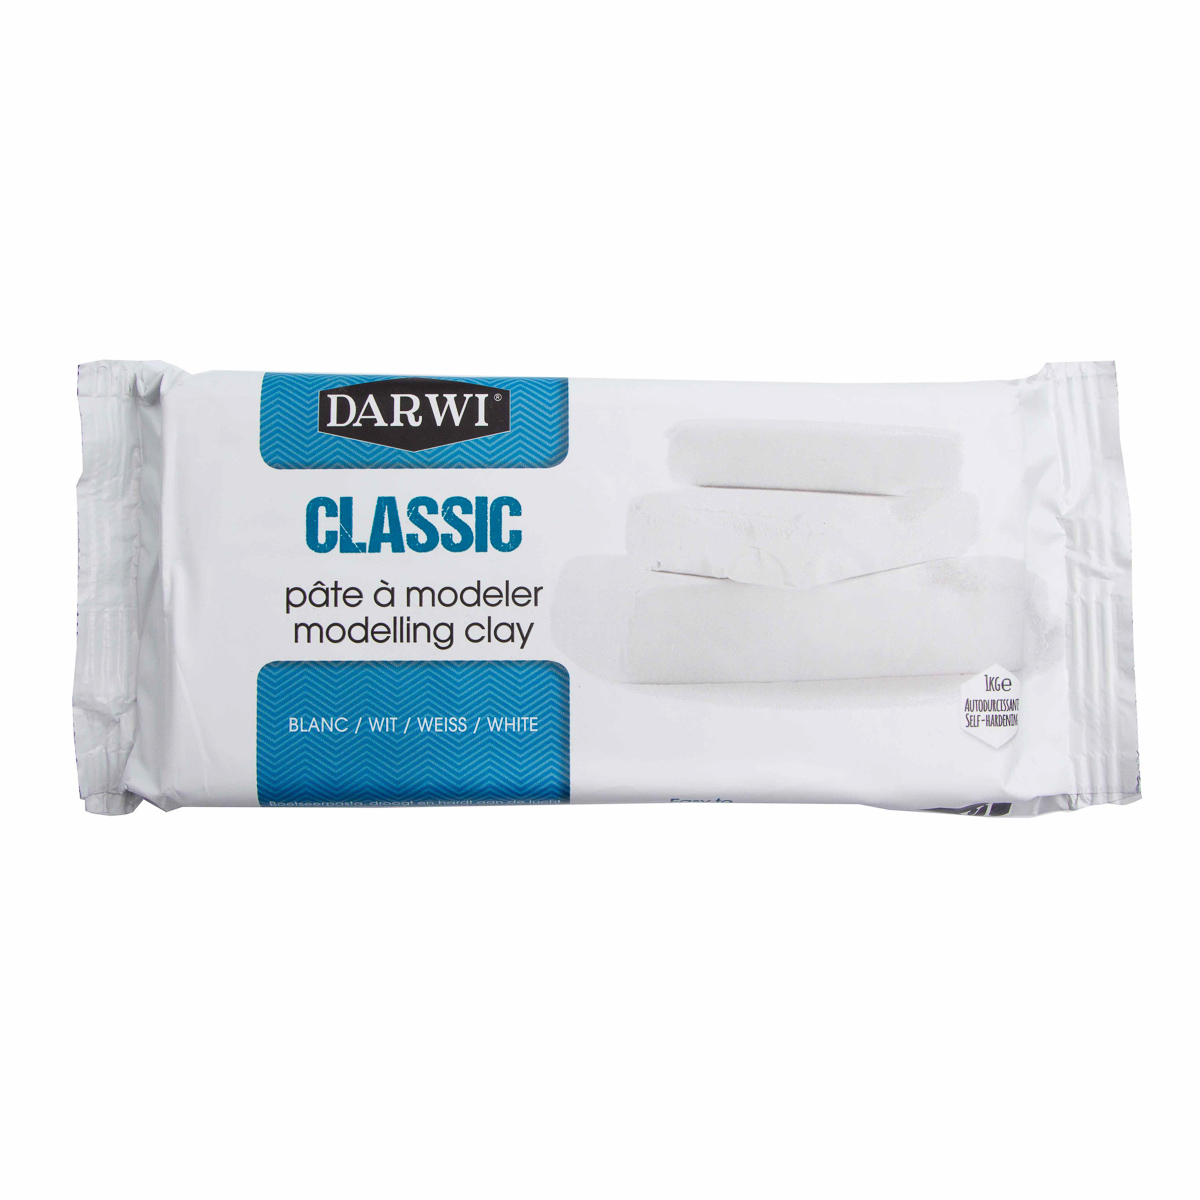 Паста для моделирования Darwi Classic, белая, 1 кг Darwi паста для моделирования 250 грамм белая